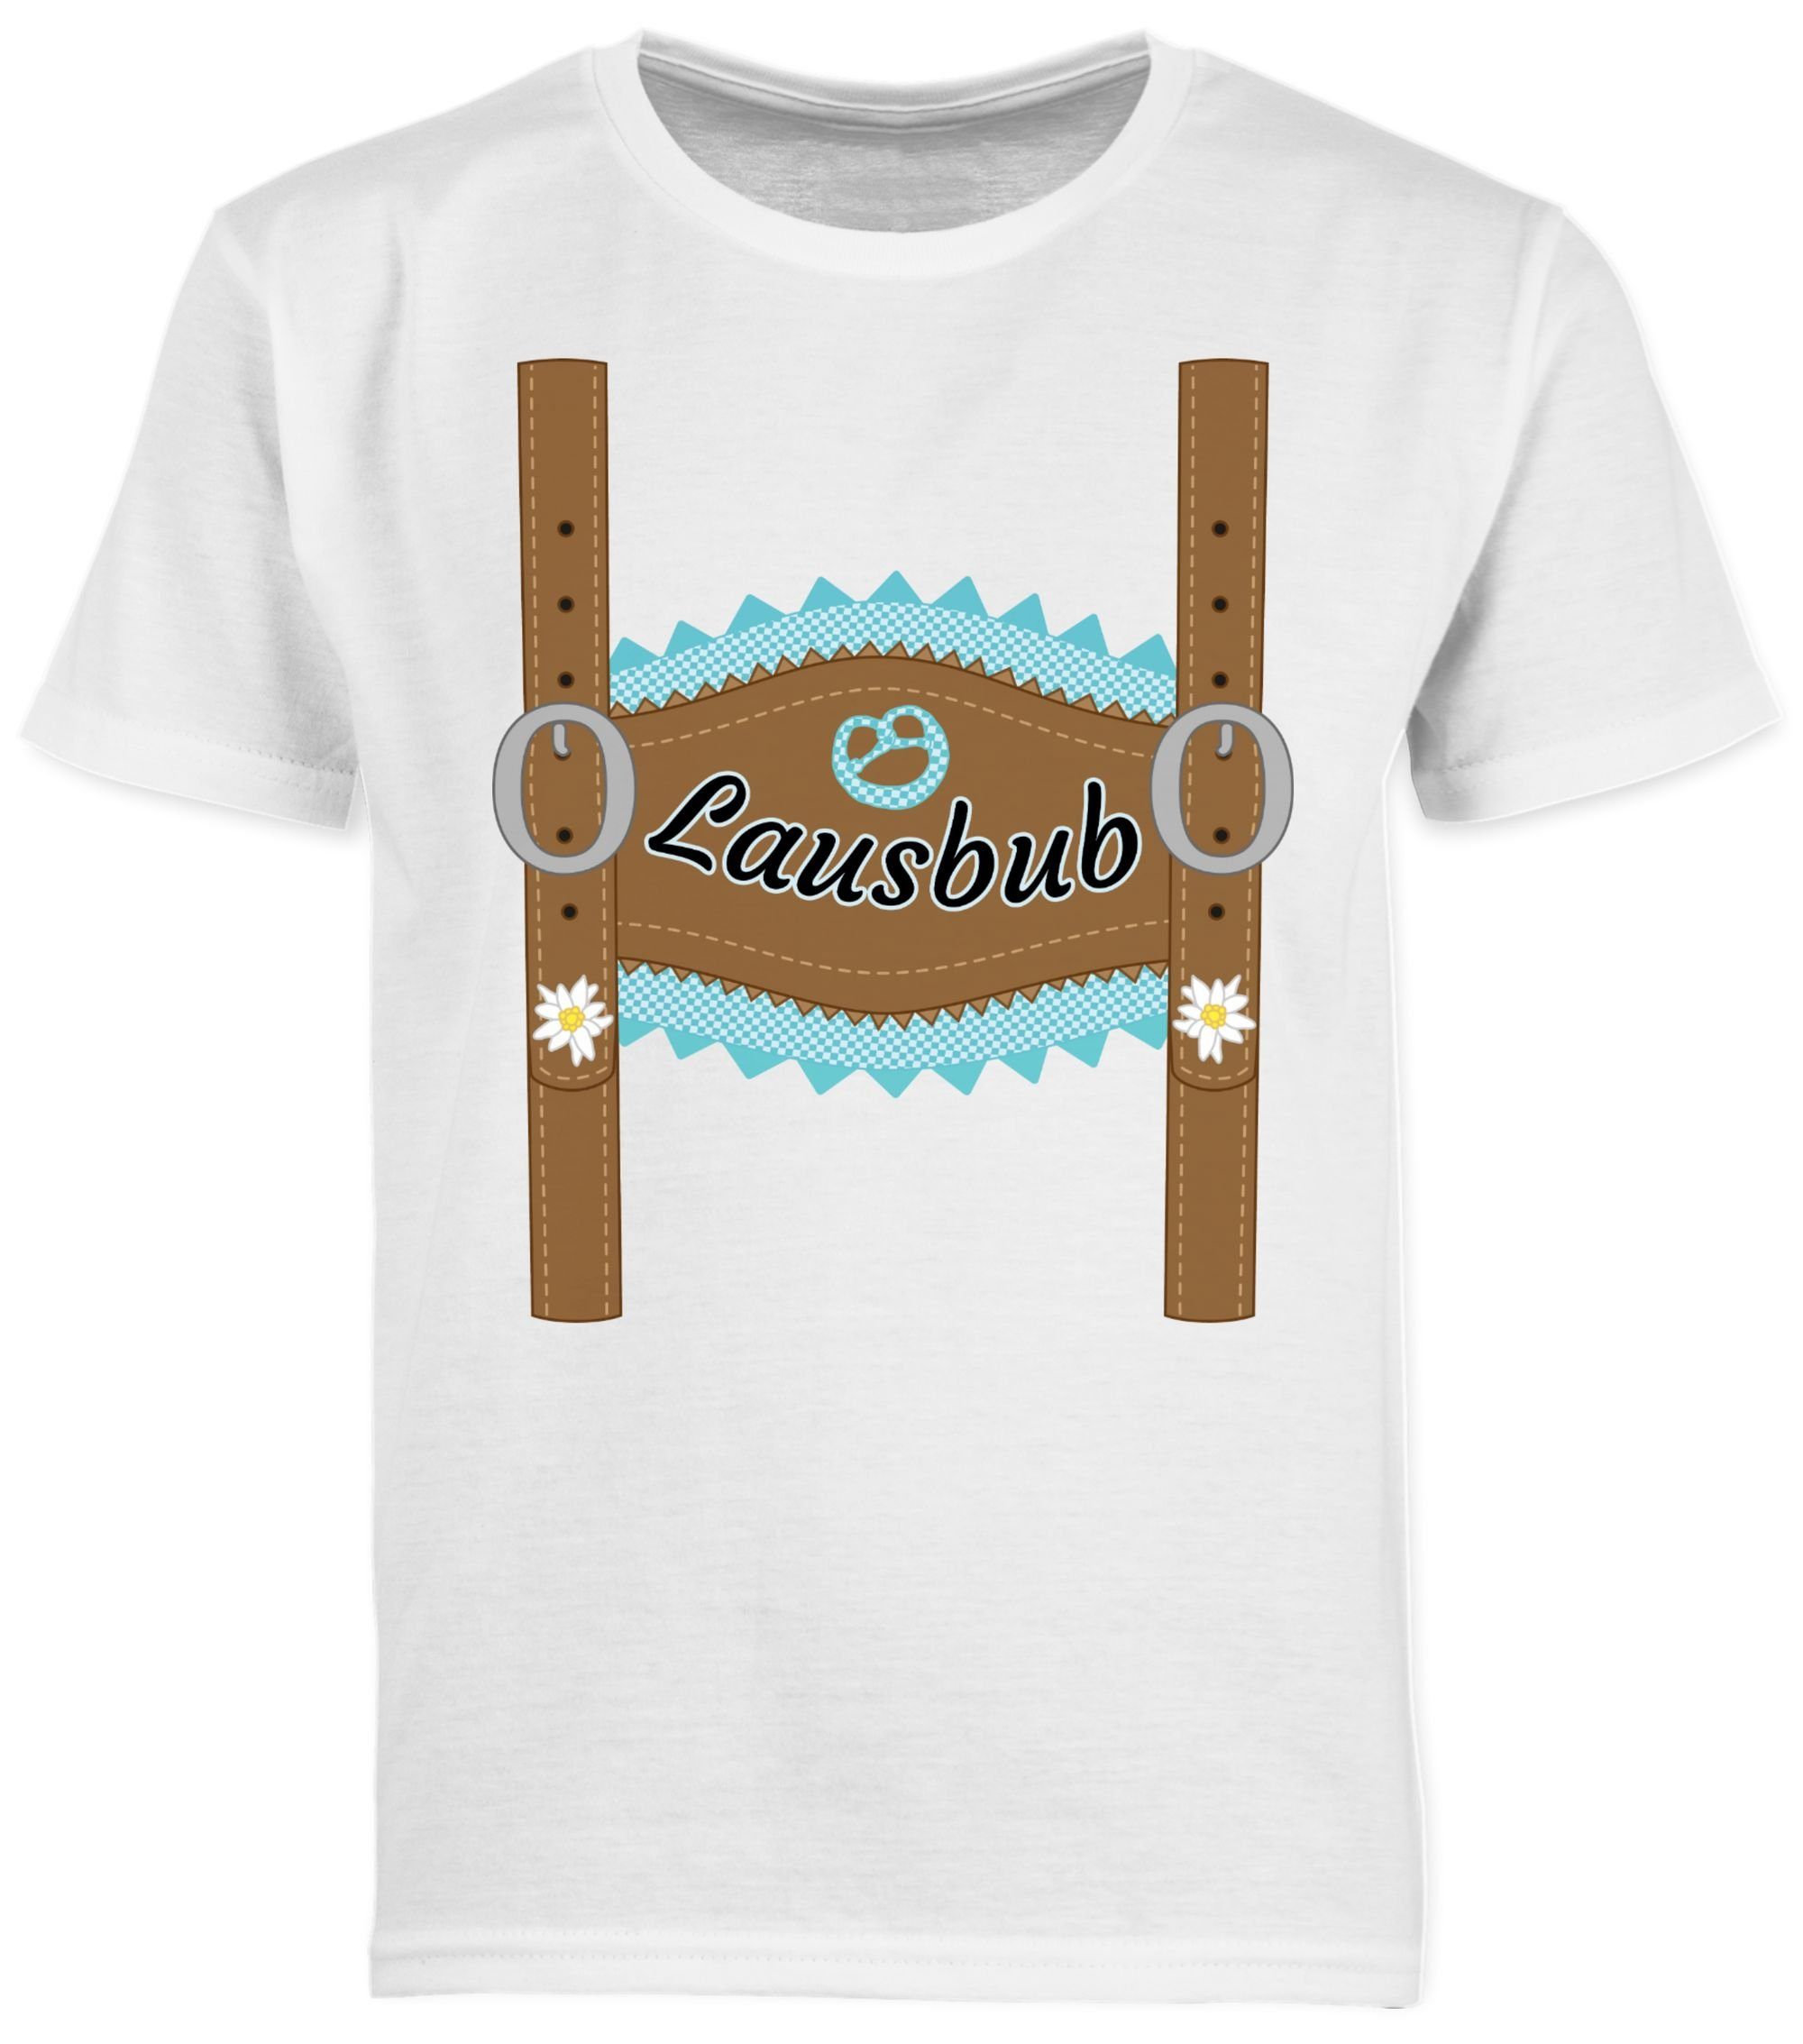 Shirtracer T-Shirt Oktoberfest Lederhose Kinder Weiß Mode Outfit für Lausbub 03